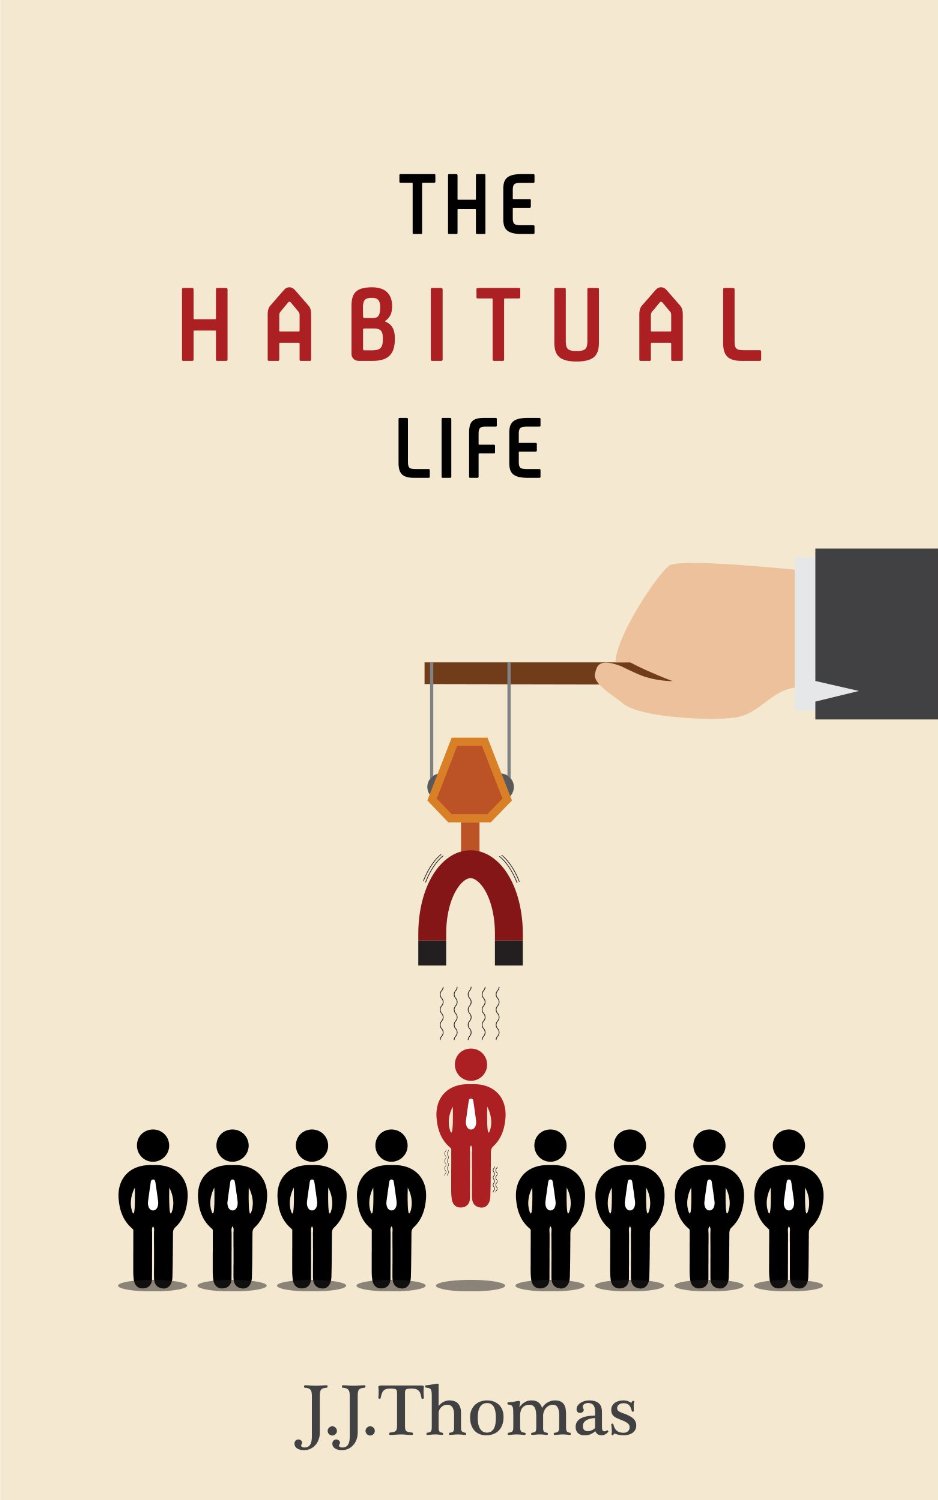 The Habitual Life by J.J. Thomas